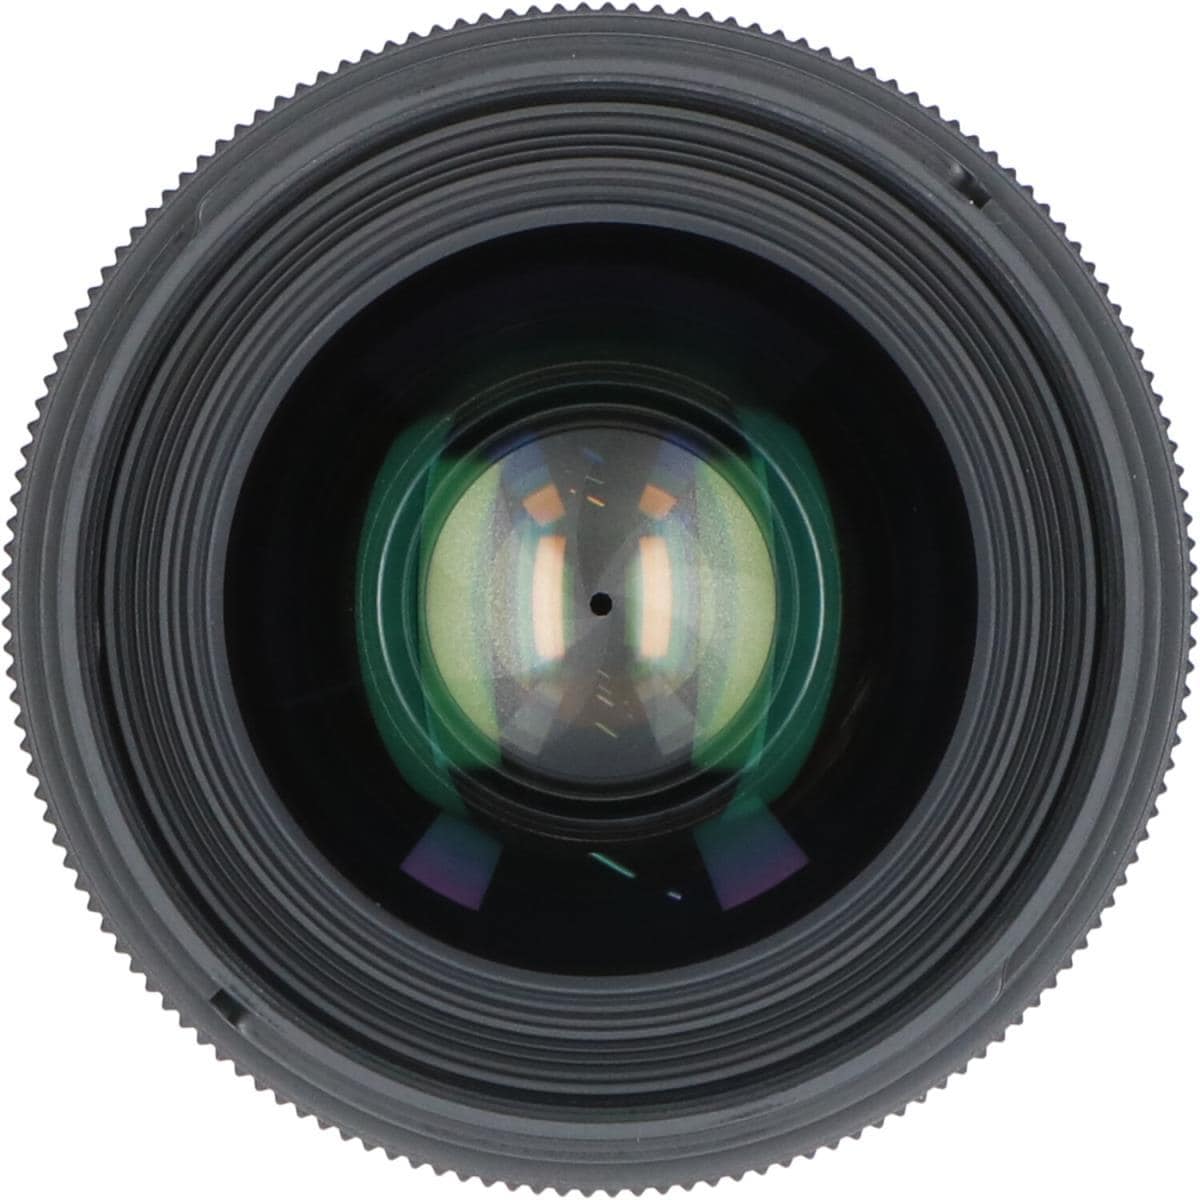 SIGMA Nikon 35mm F1.4DG HSM (A)